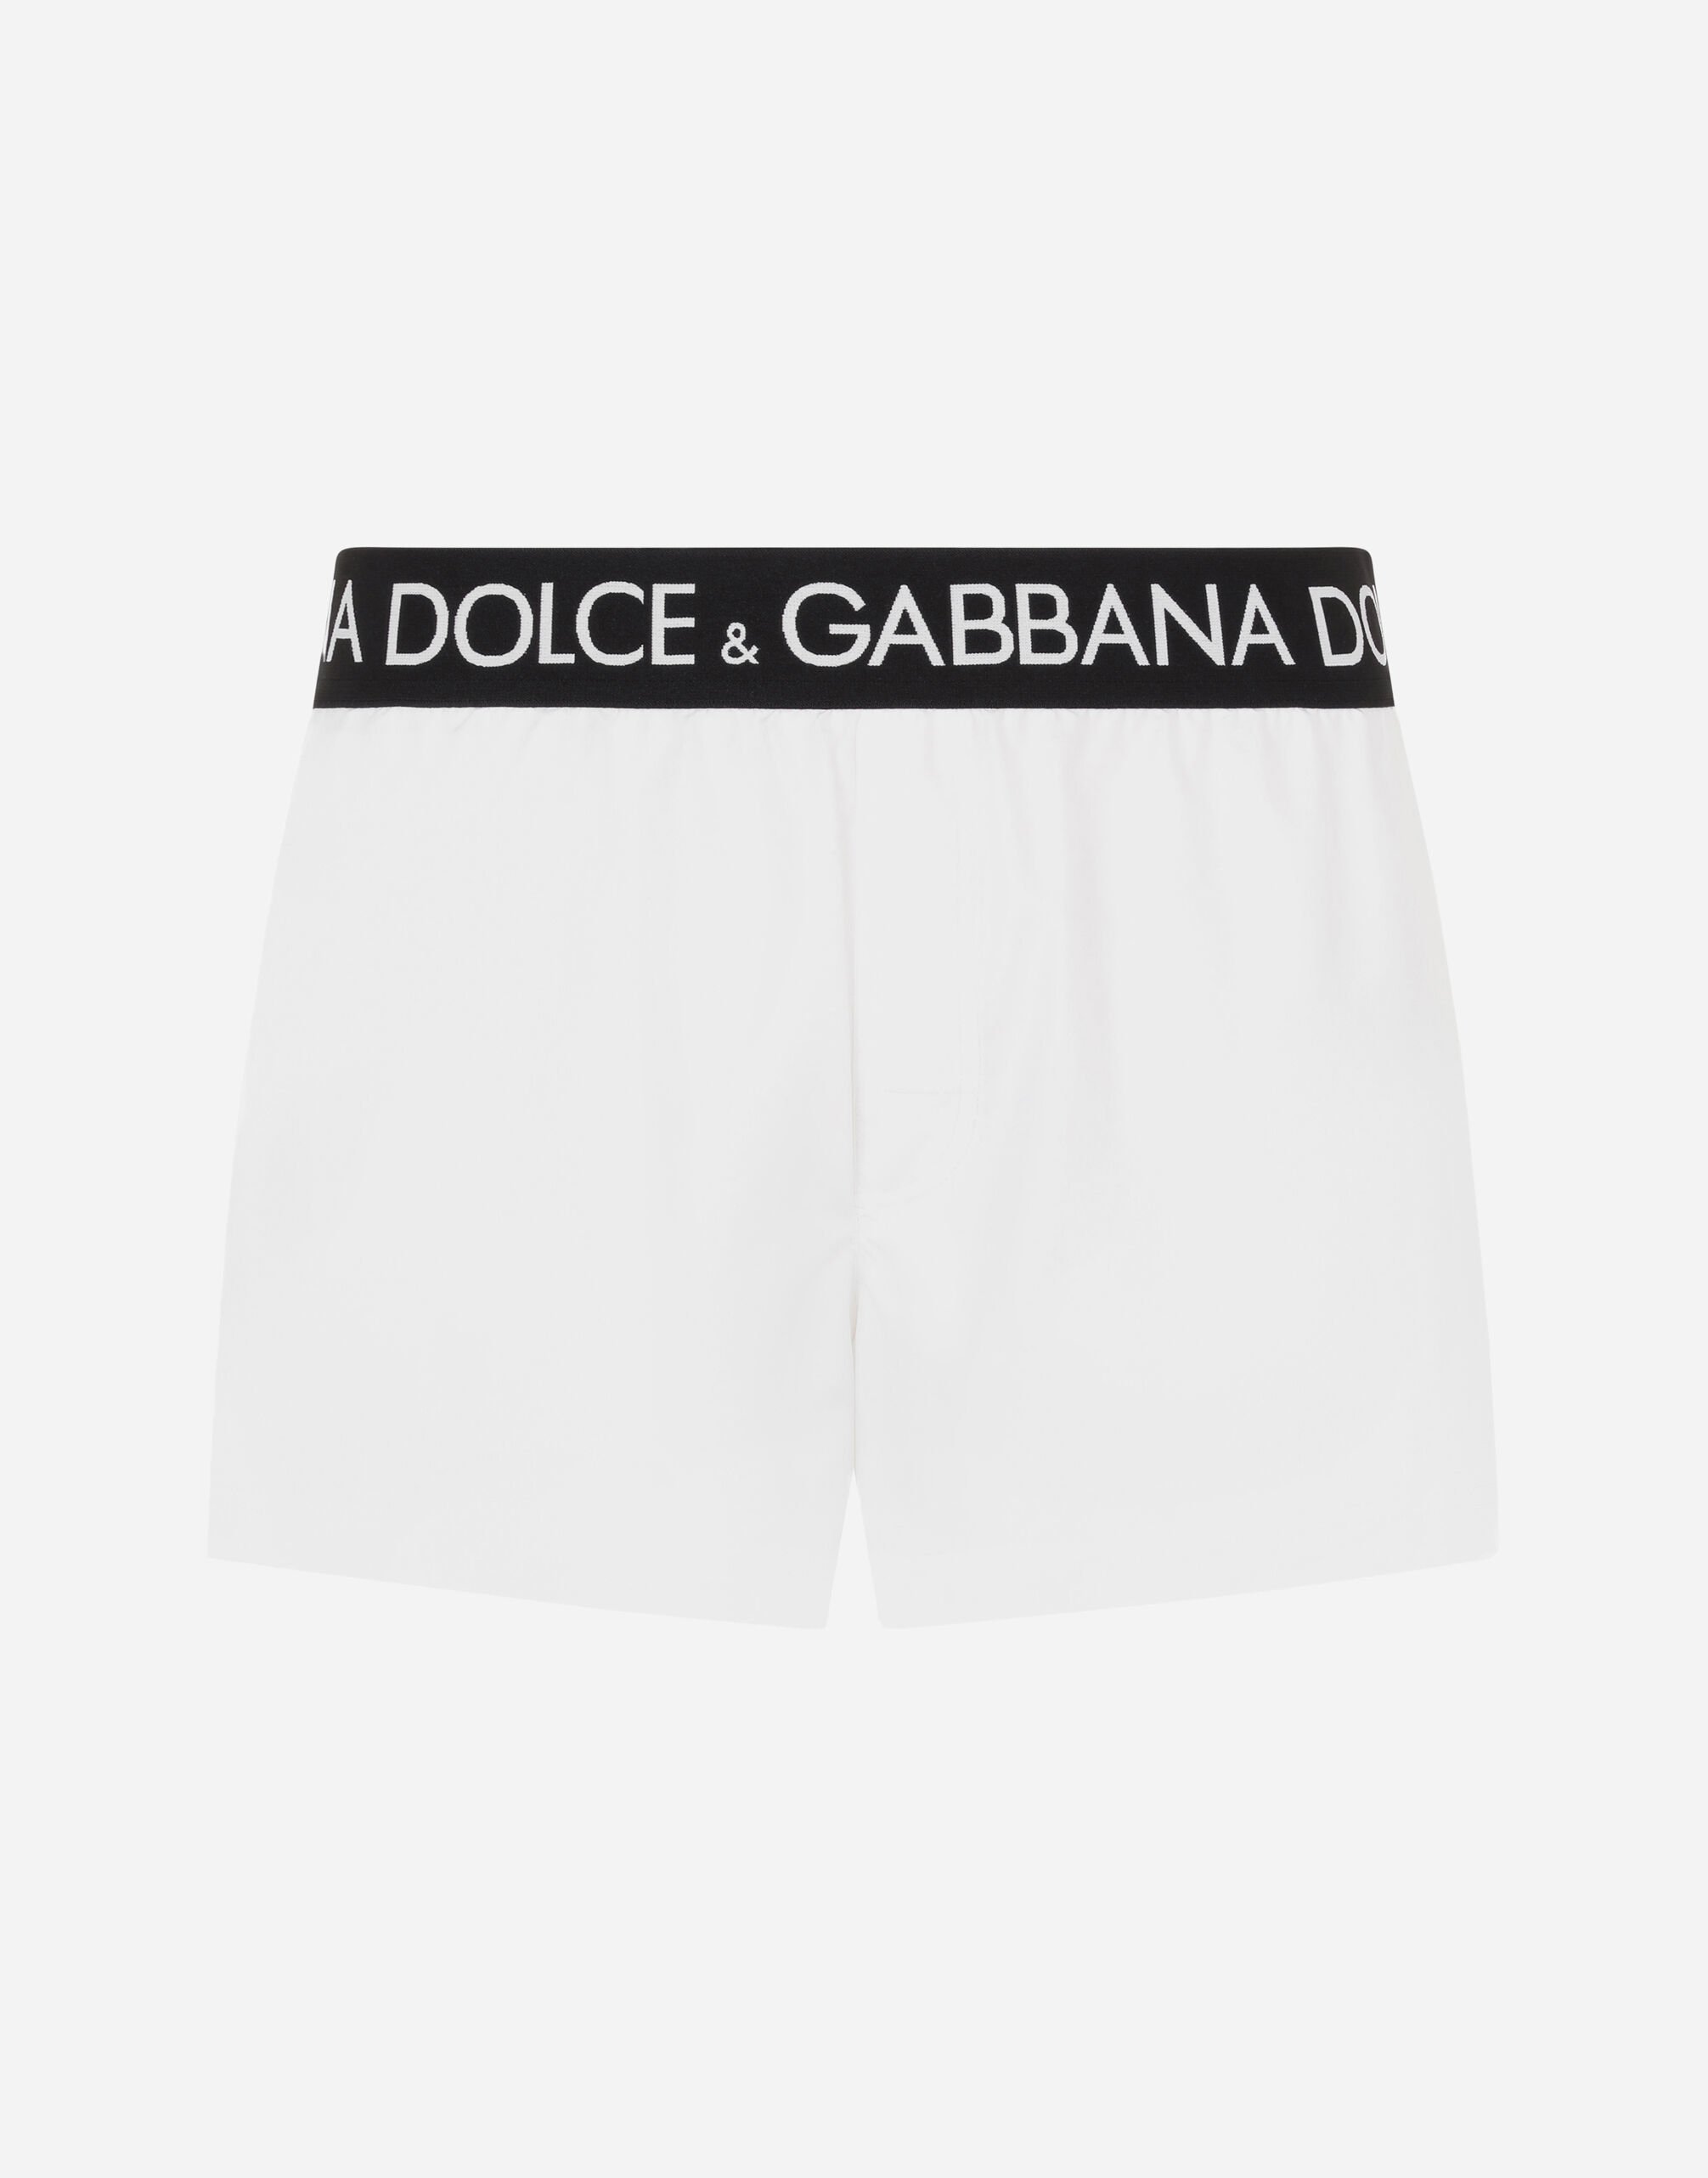 Dolce & Gabbana Short swim trunks with branded stretch waistband Print M4E68TISMF5